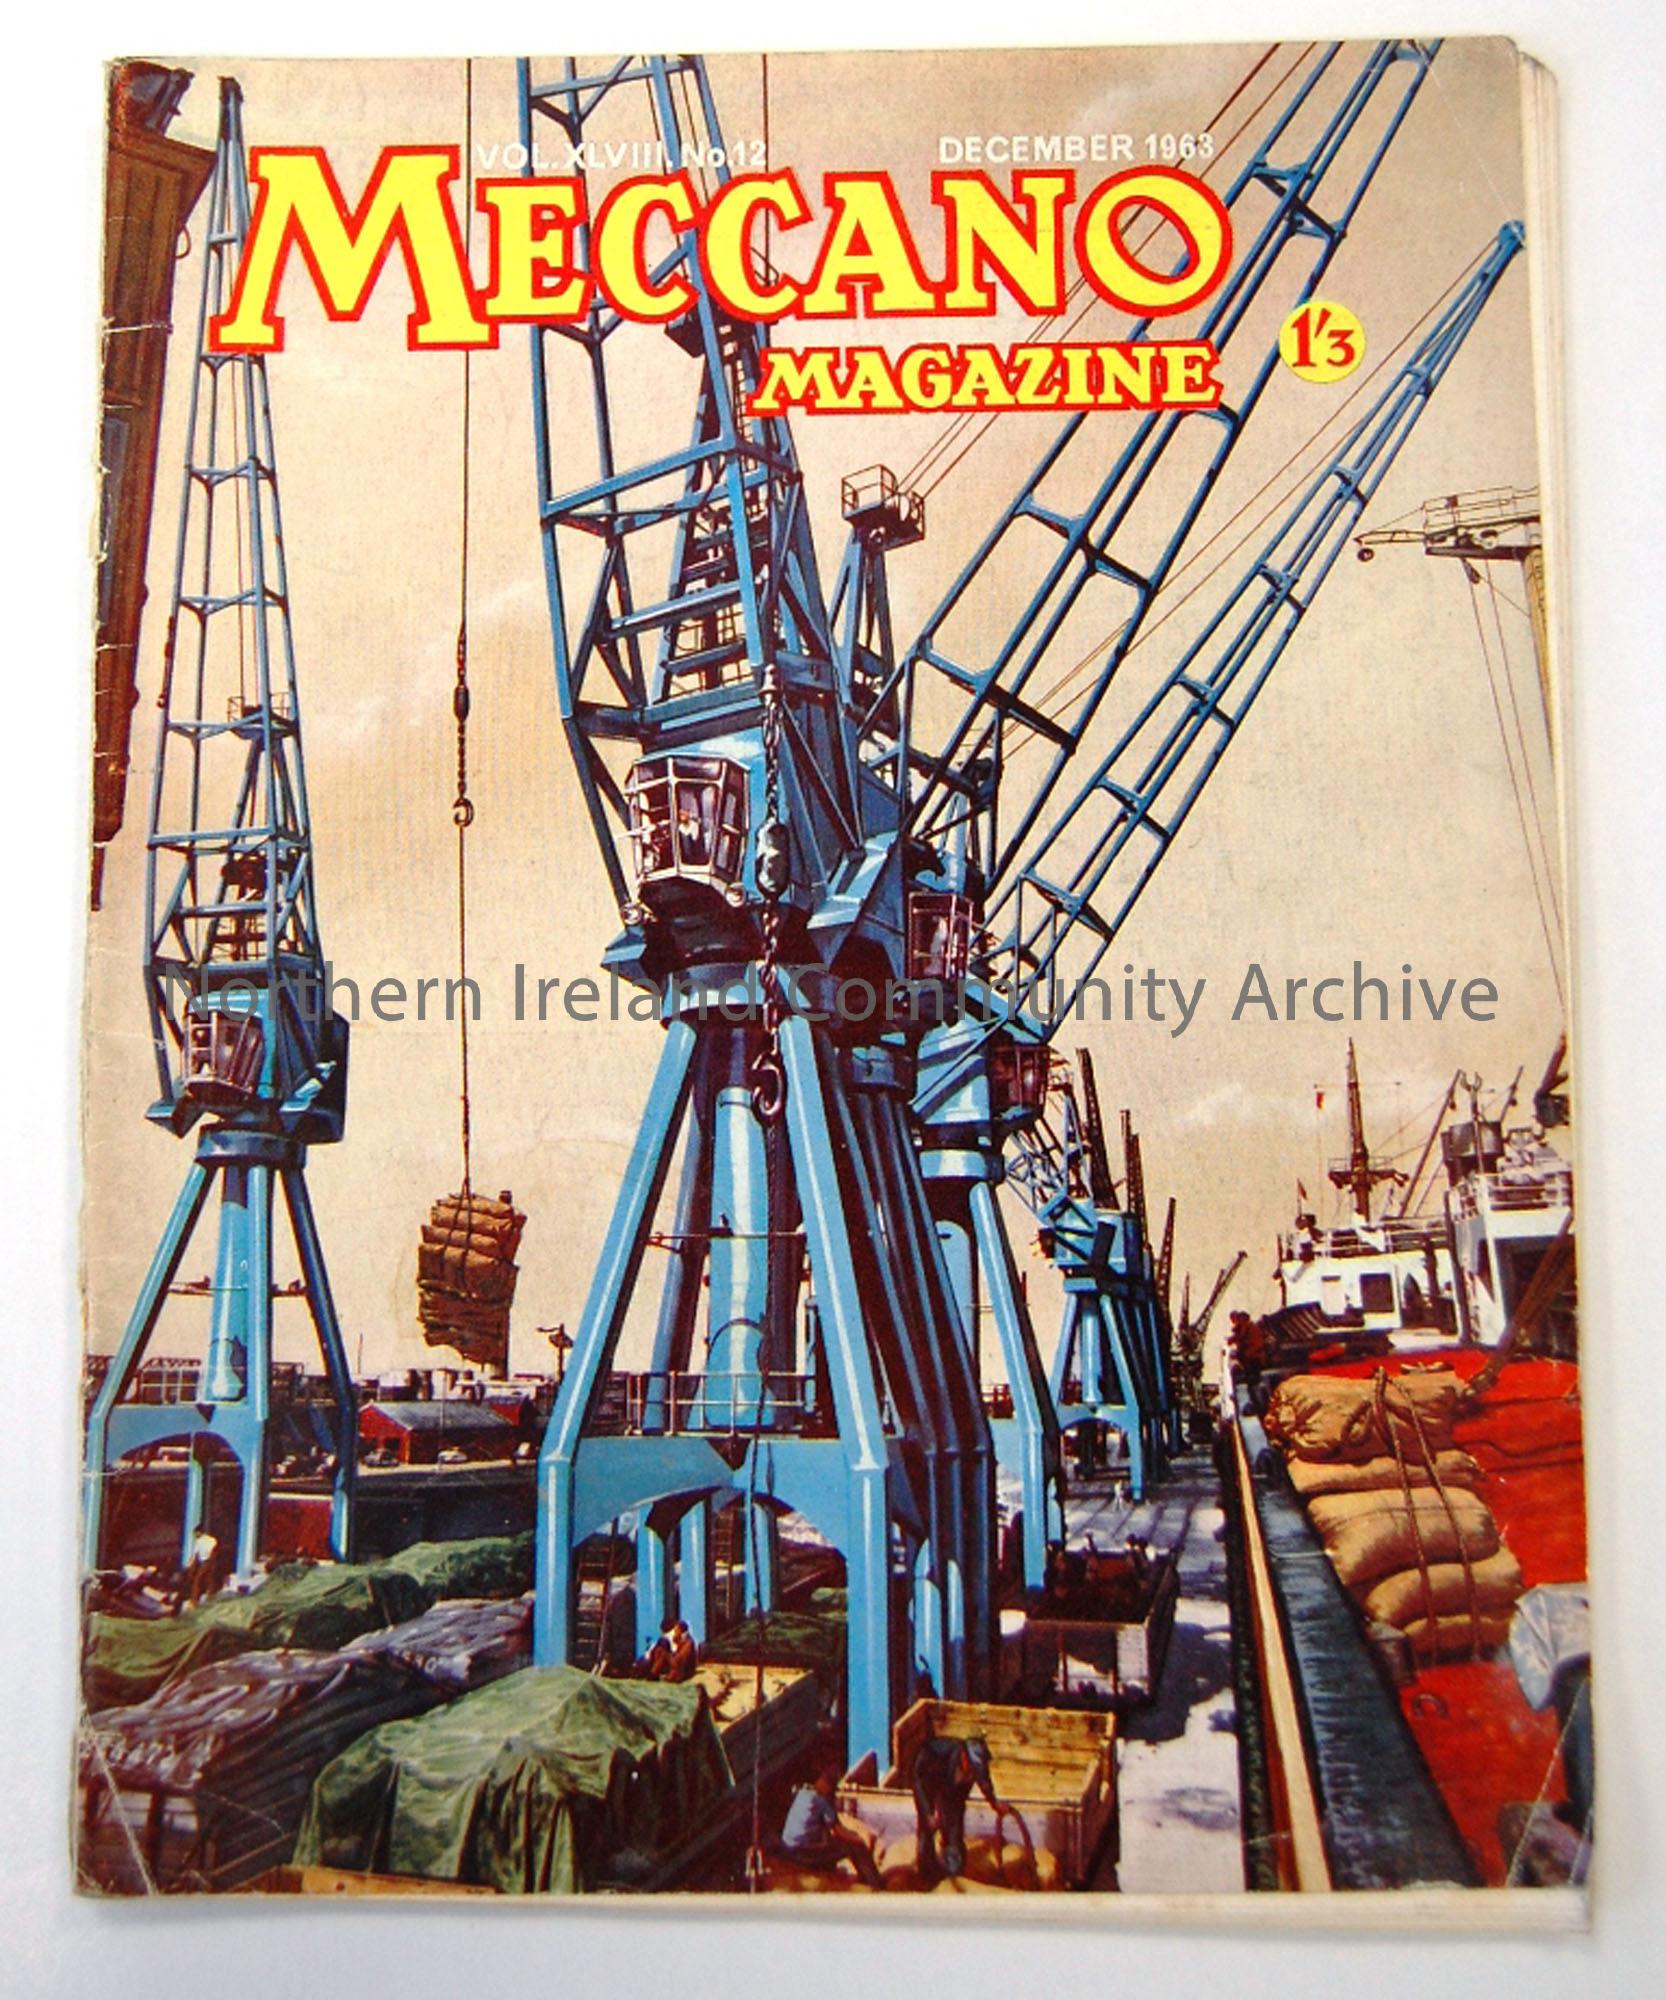 Meccano magazine VOL. XLVIII.No. 12. December 1963 Price 1’3